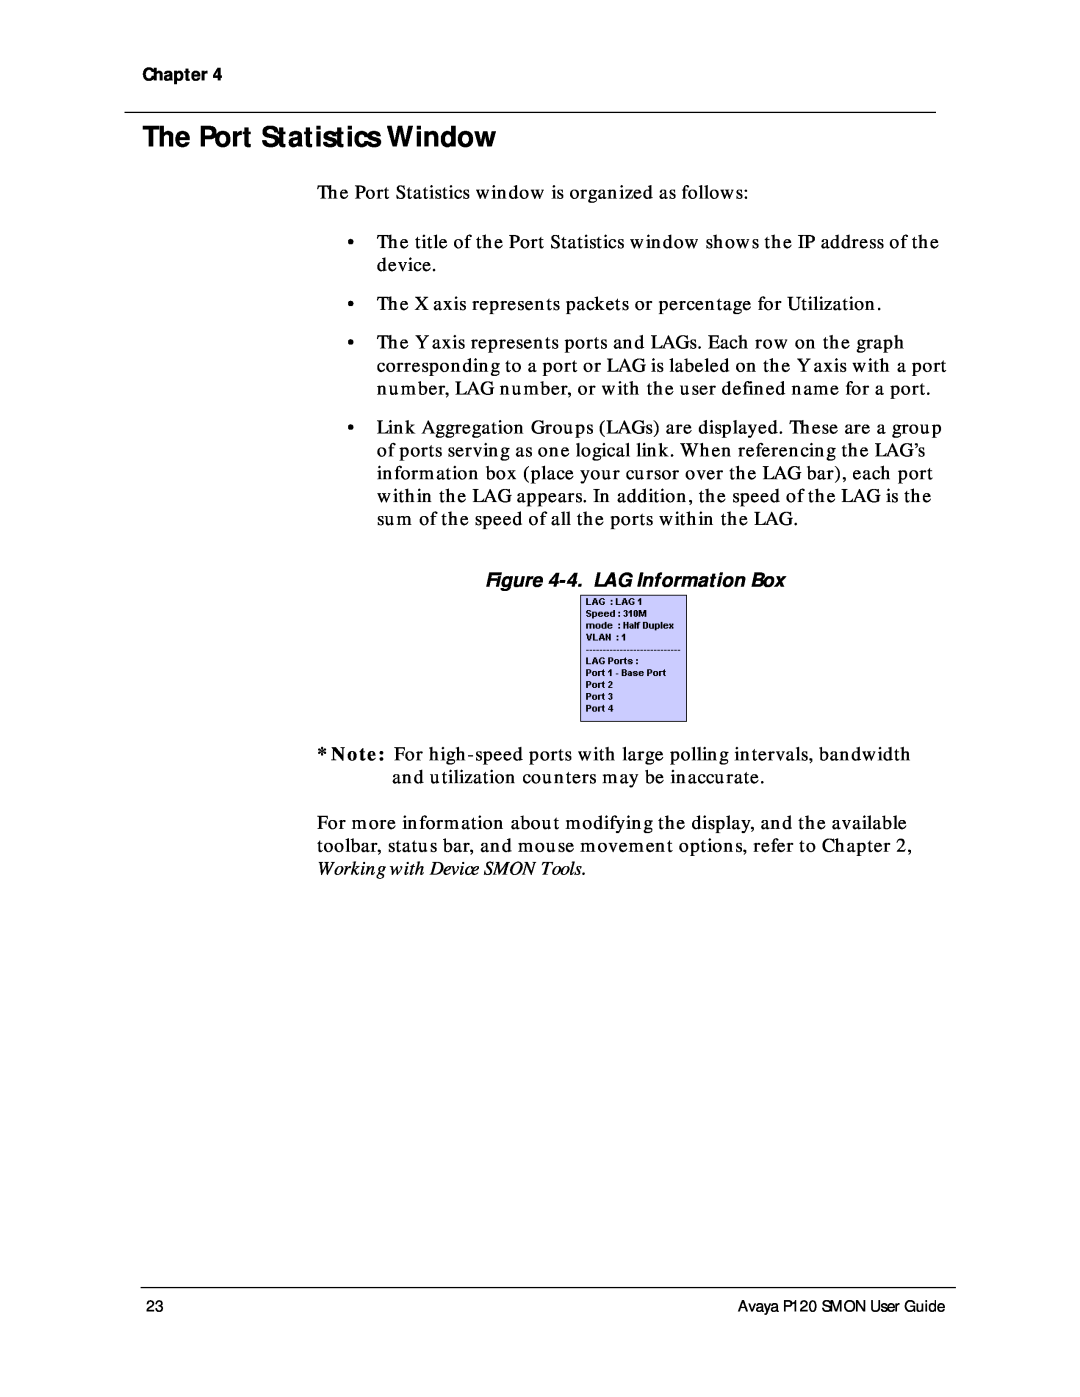 Avaya P120 SMON manual The Port Statistics Window, 4. LAG Information Box 